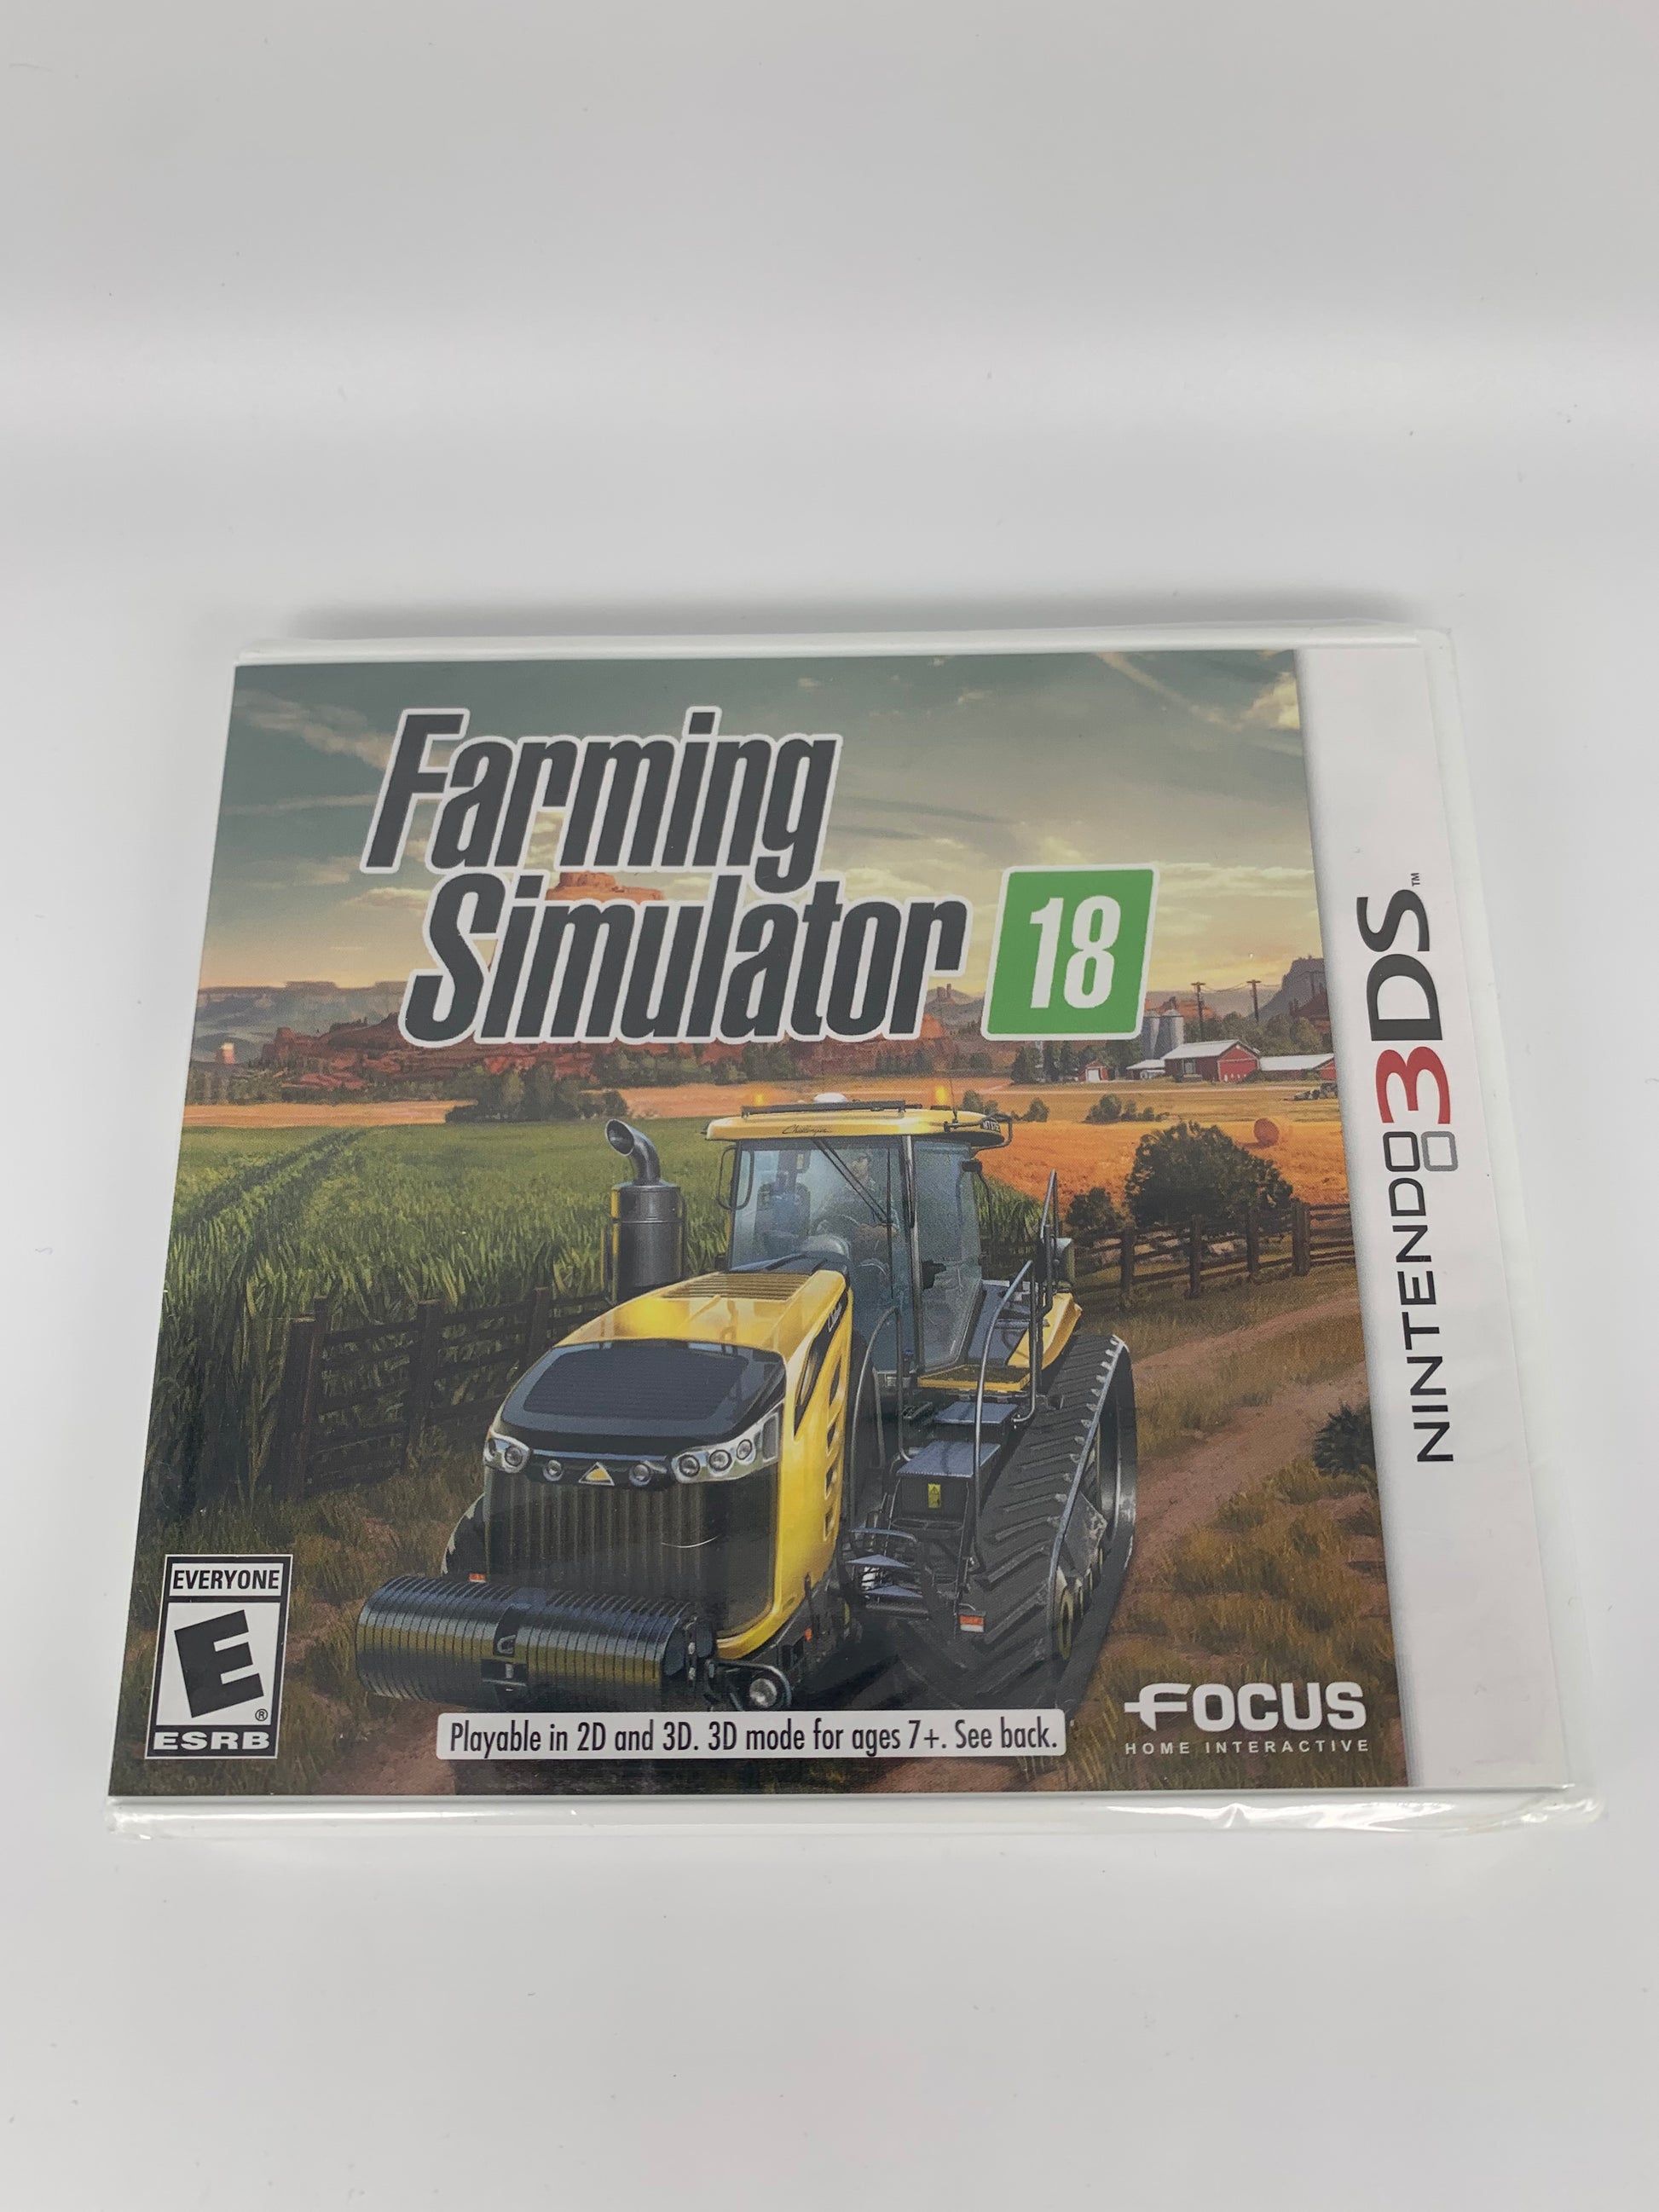 PiXEL-RETRO.COM : NINTENDO 3DS (3DS) COMPLETE CIB BOX MANUAL GAME NTSC BRAND NEW SEALED FARMING SIMULATOR 18